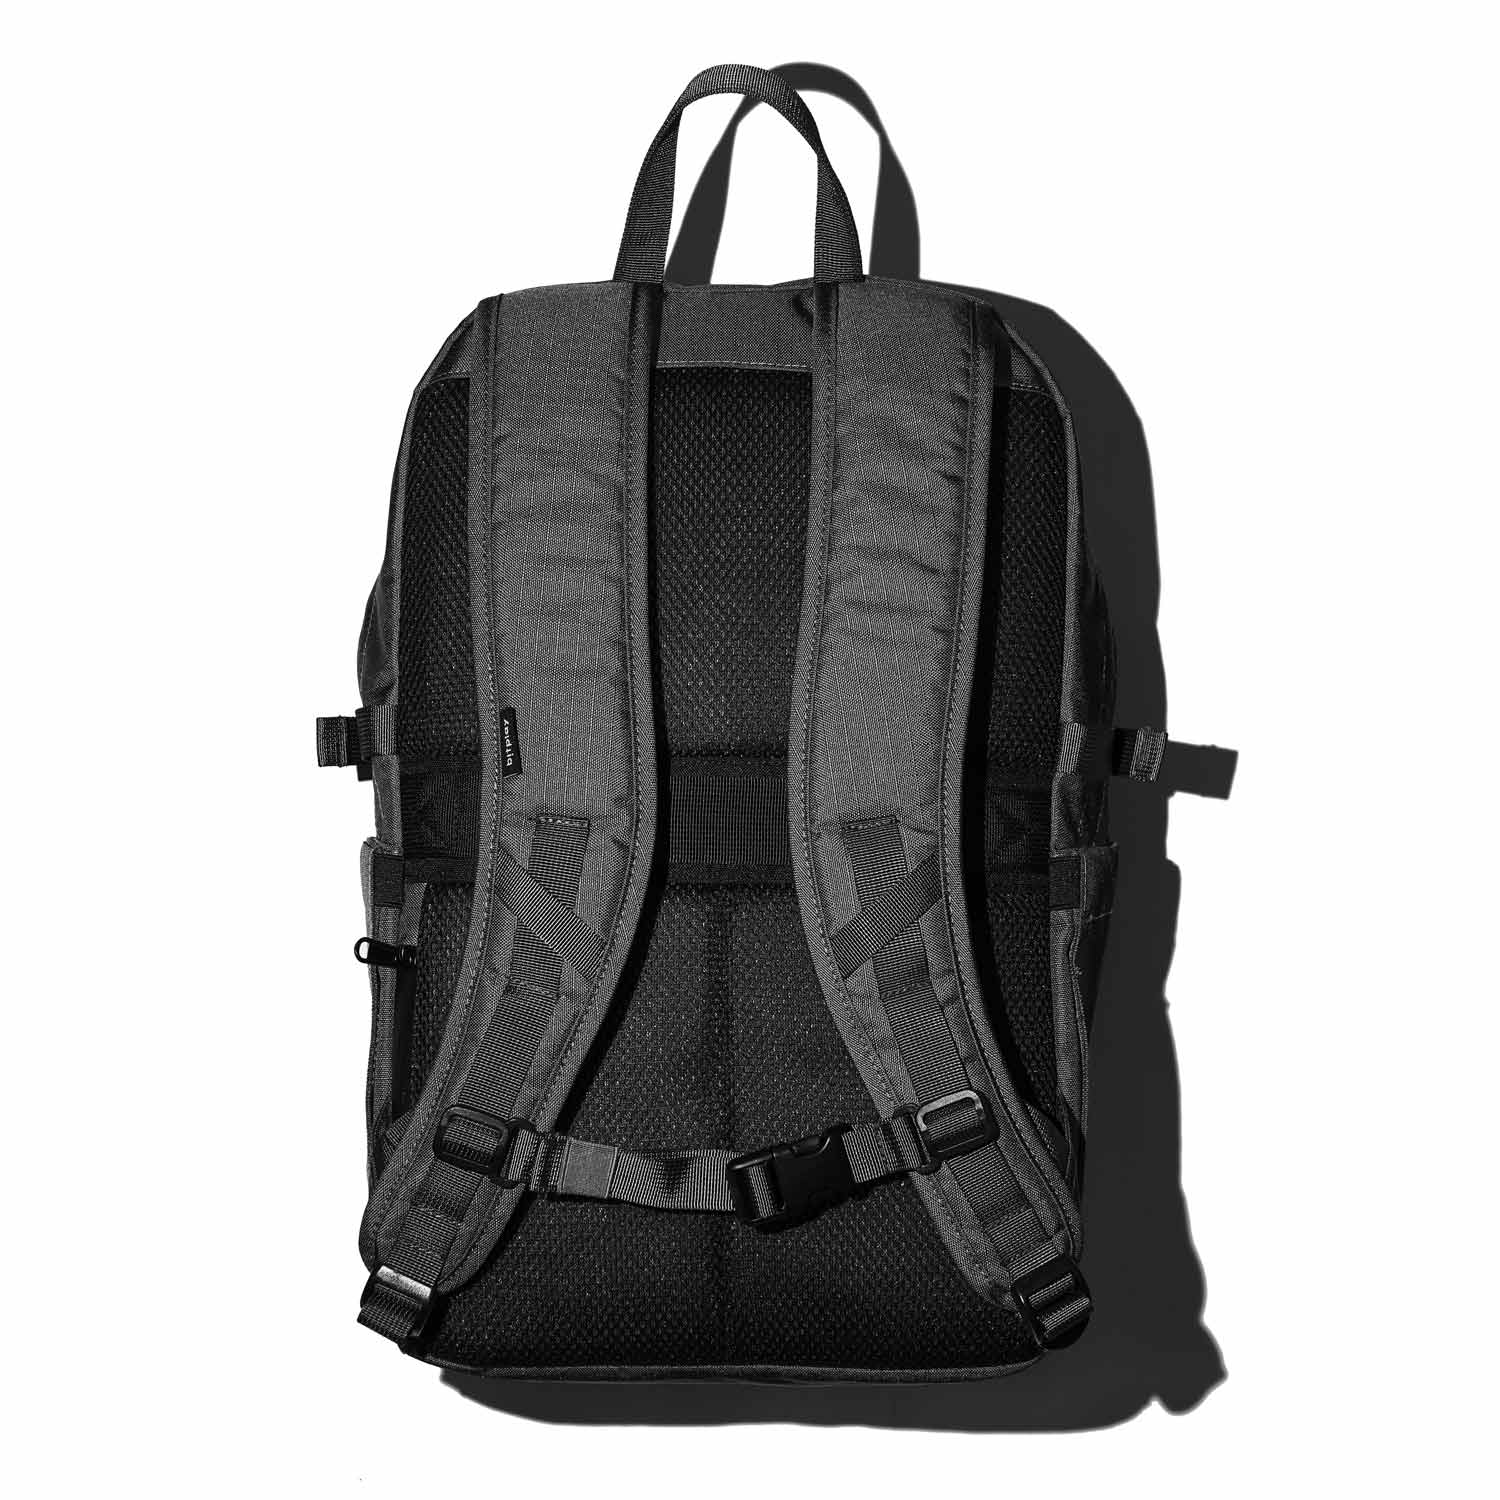 Bitplay Urban Daypack 13L Light Travel Laptop Bag